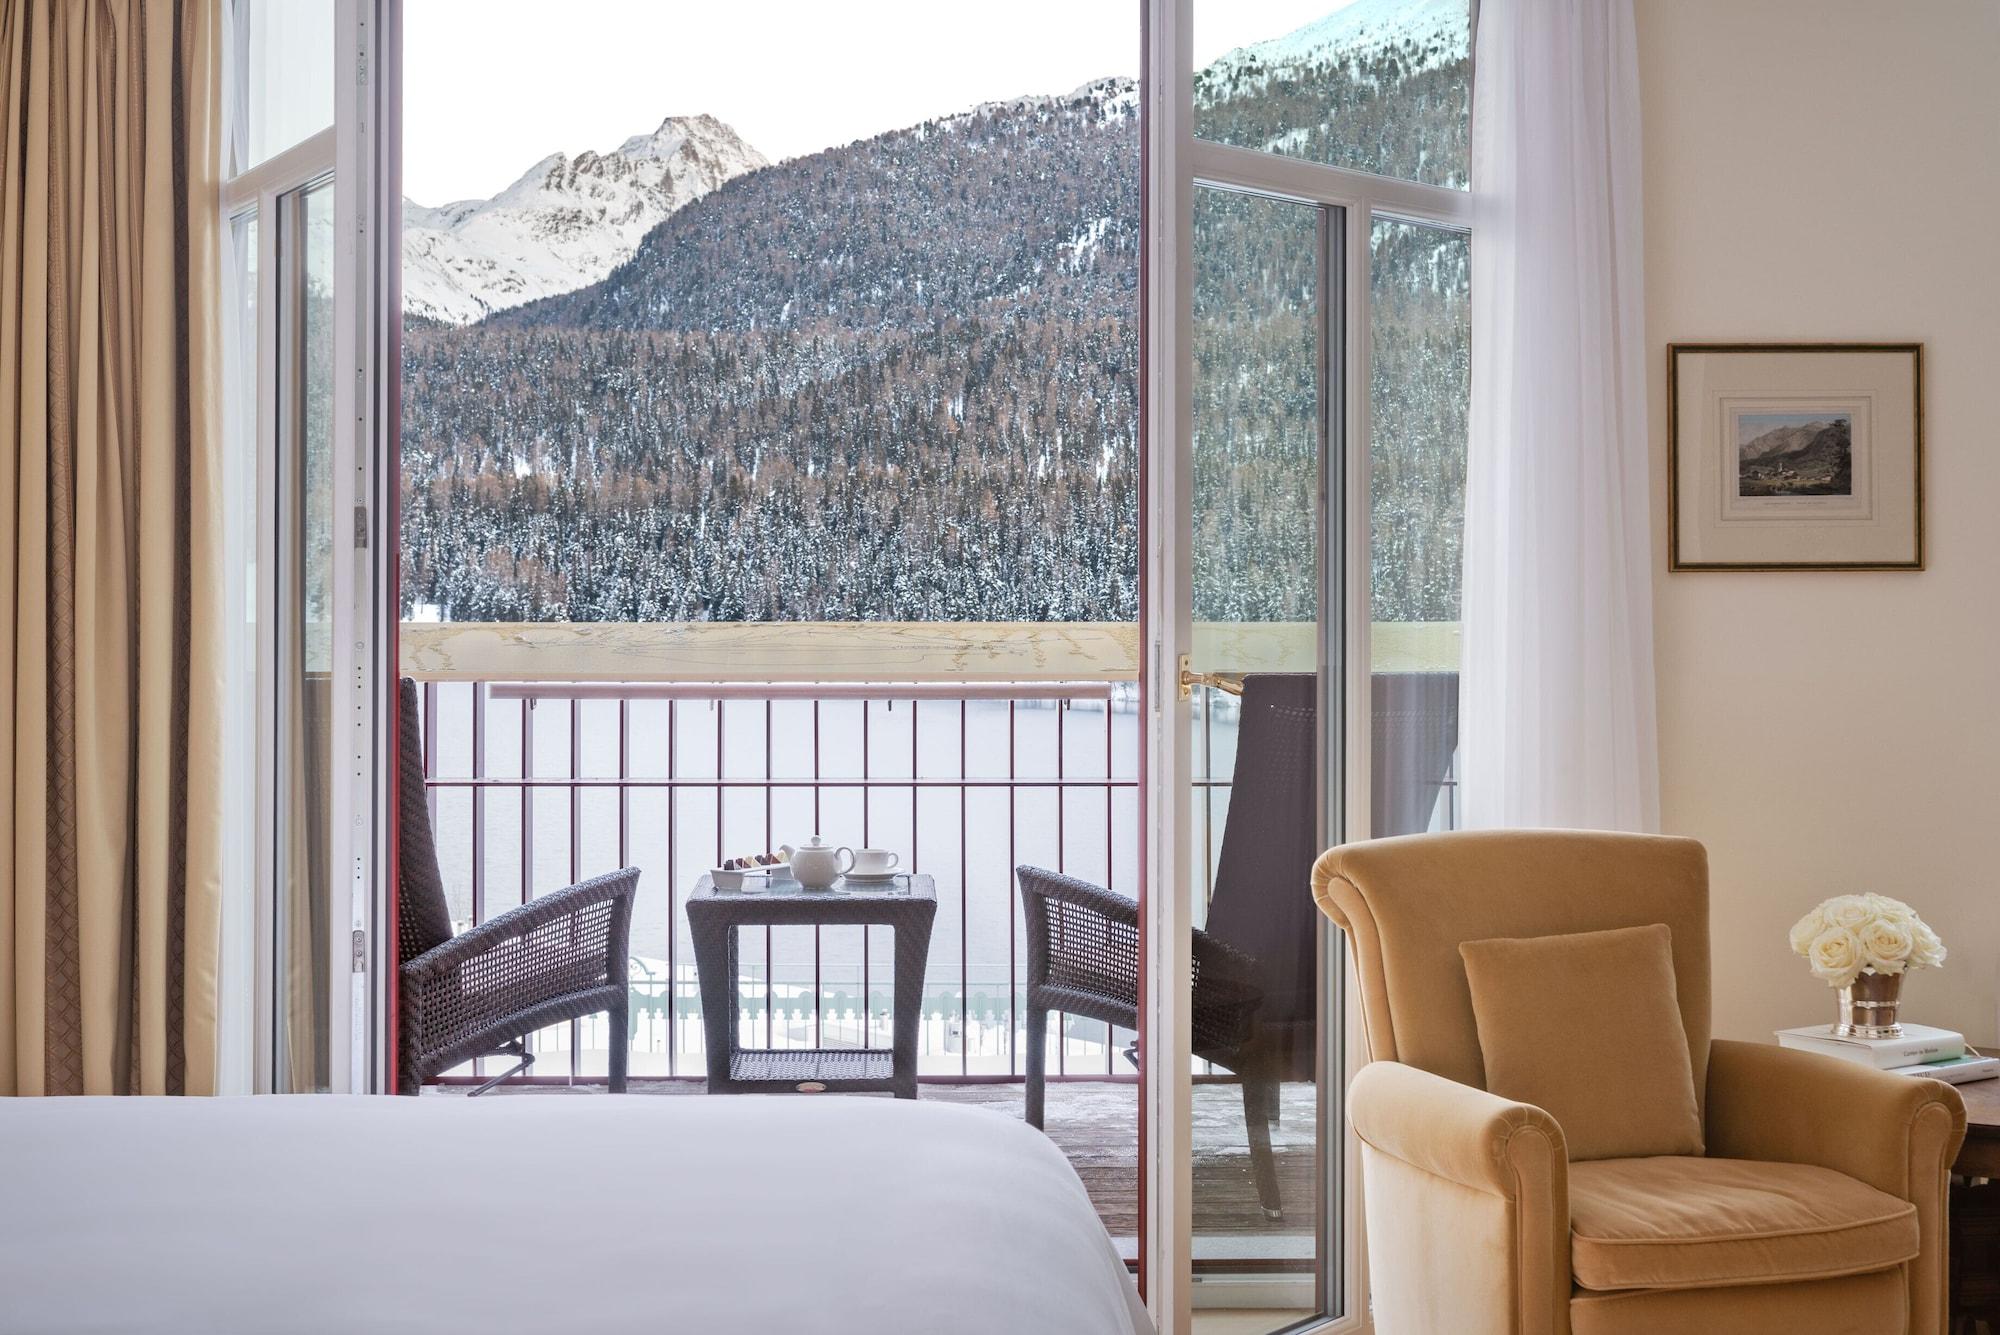 Badrutt'S Palace Hotel St Moritz 외부 사진